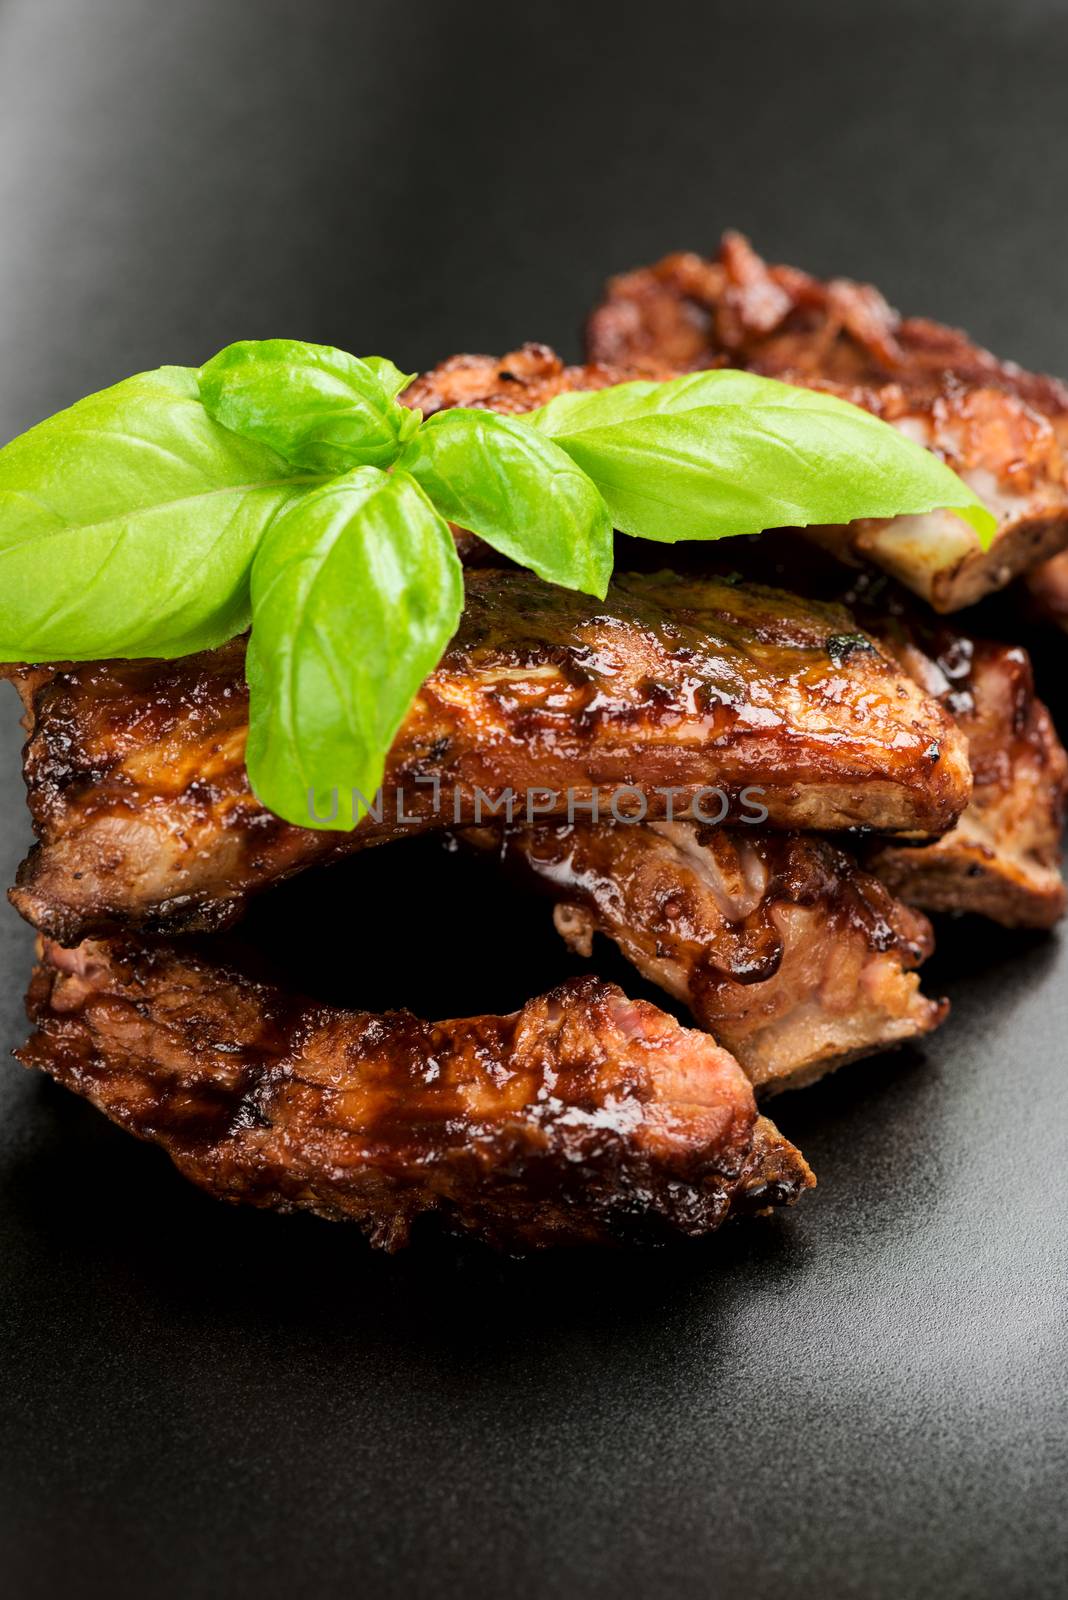 Barbecued ribs with oregano leaf